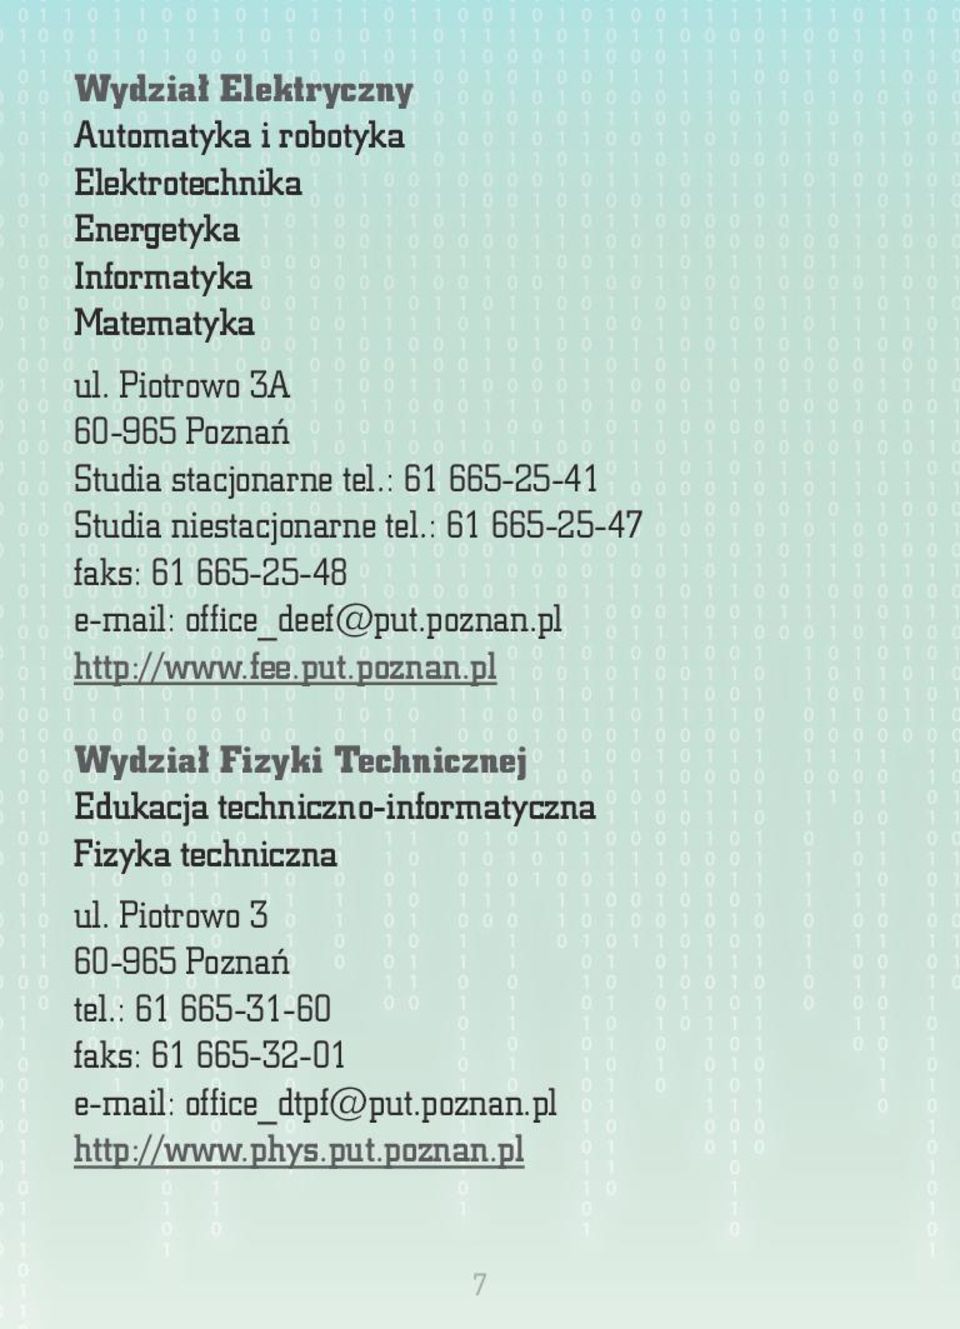 : 61 665-25-47 faks: 61 665-25-48 e-mail: office_deef@put.poznan.